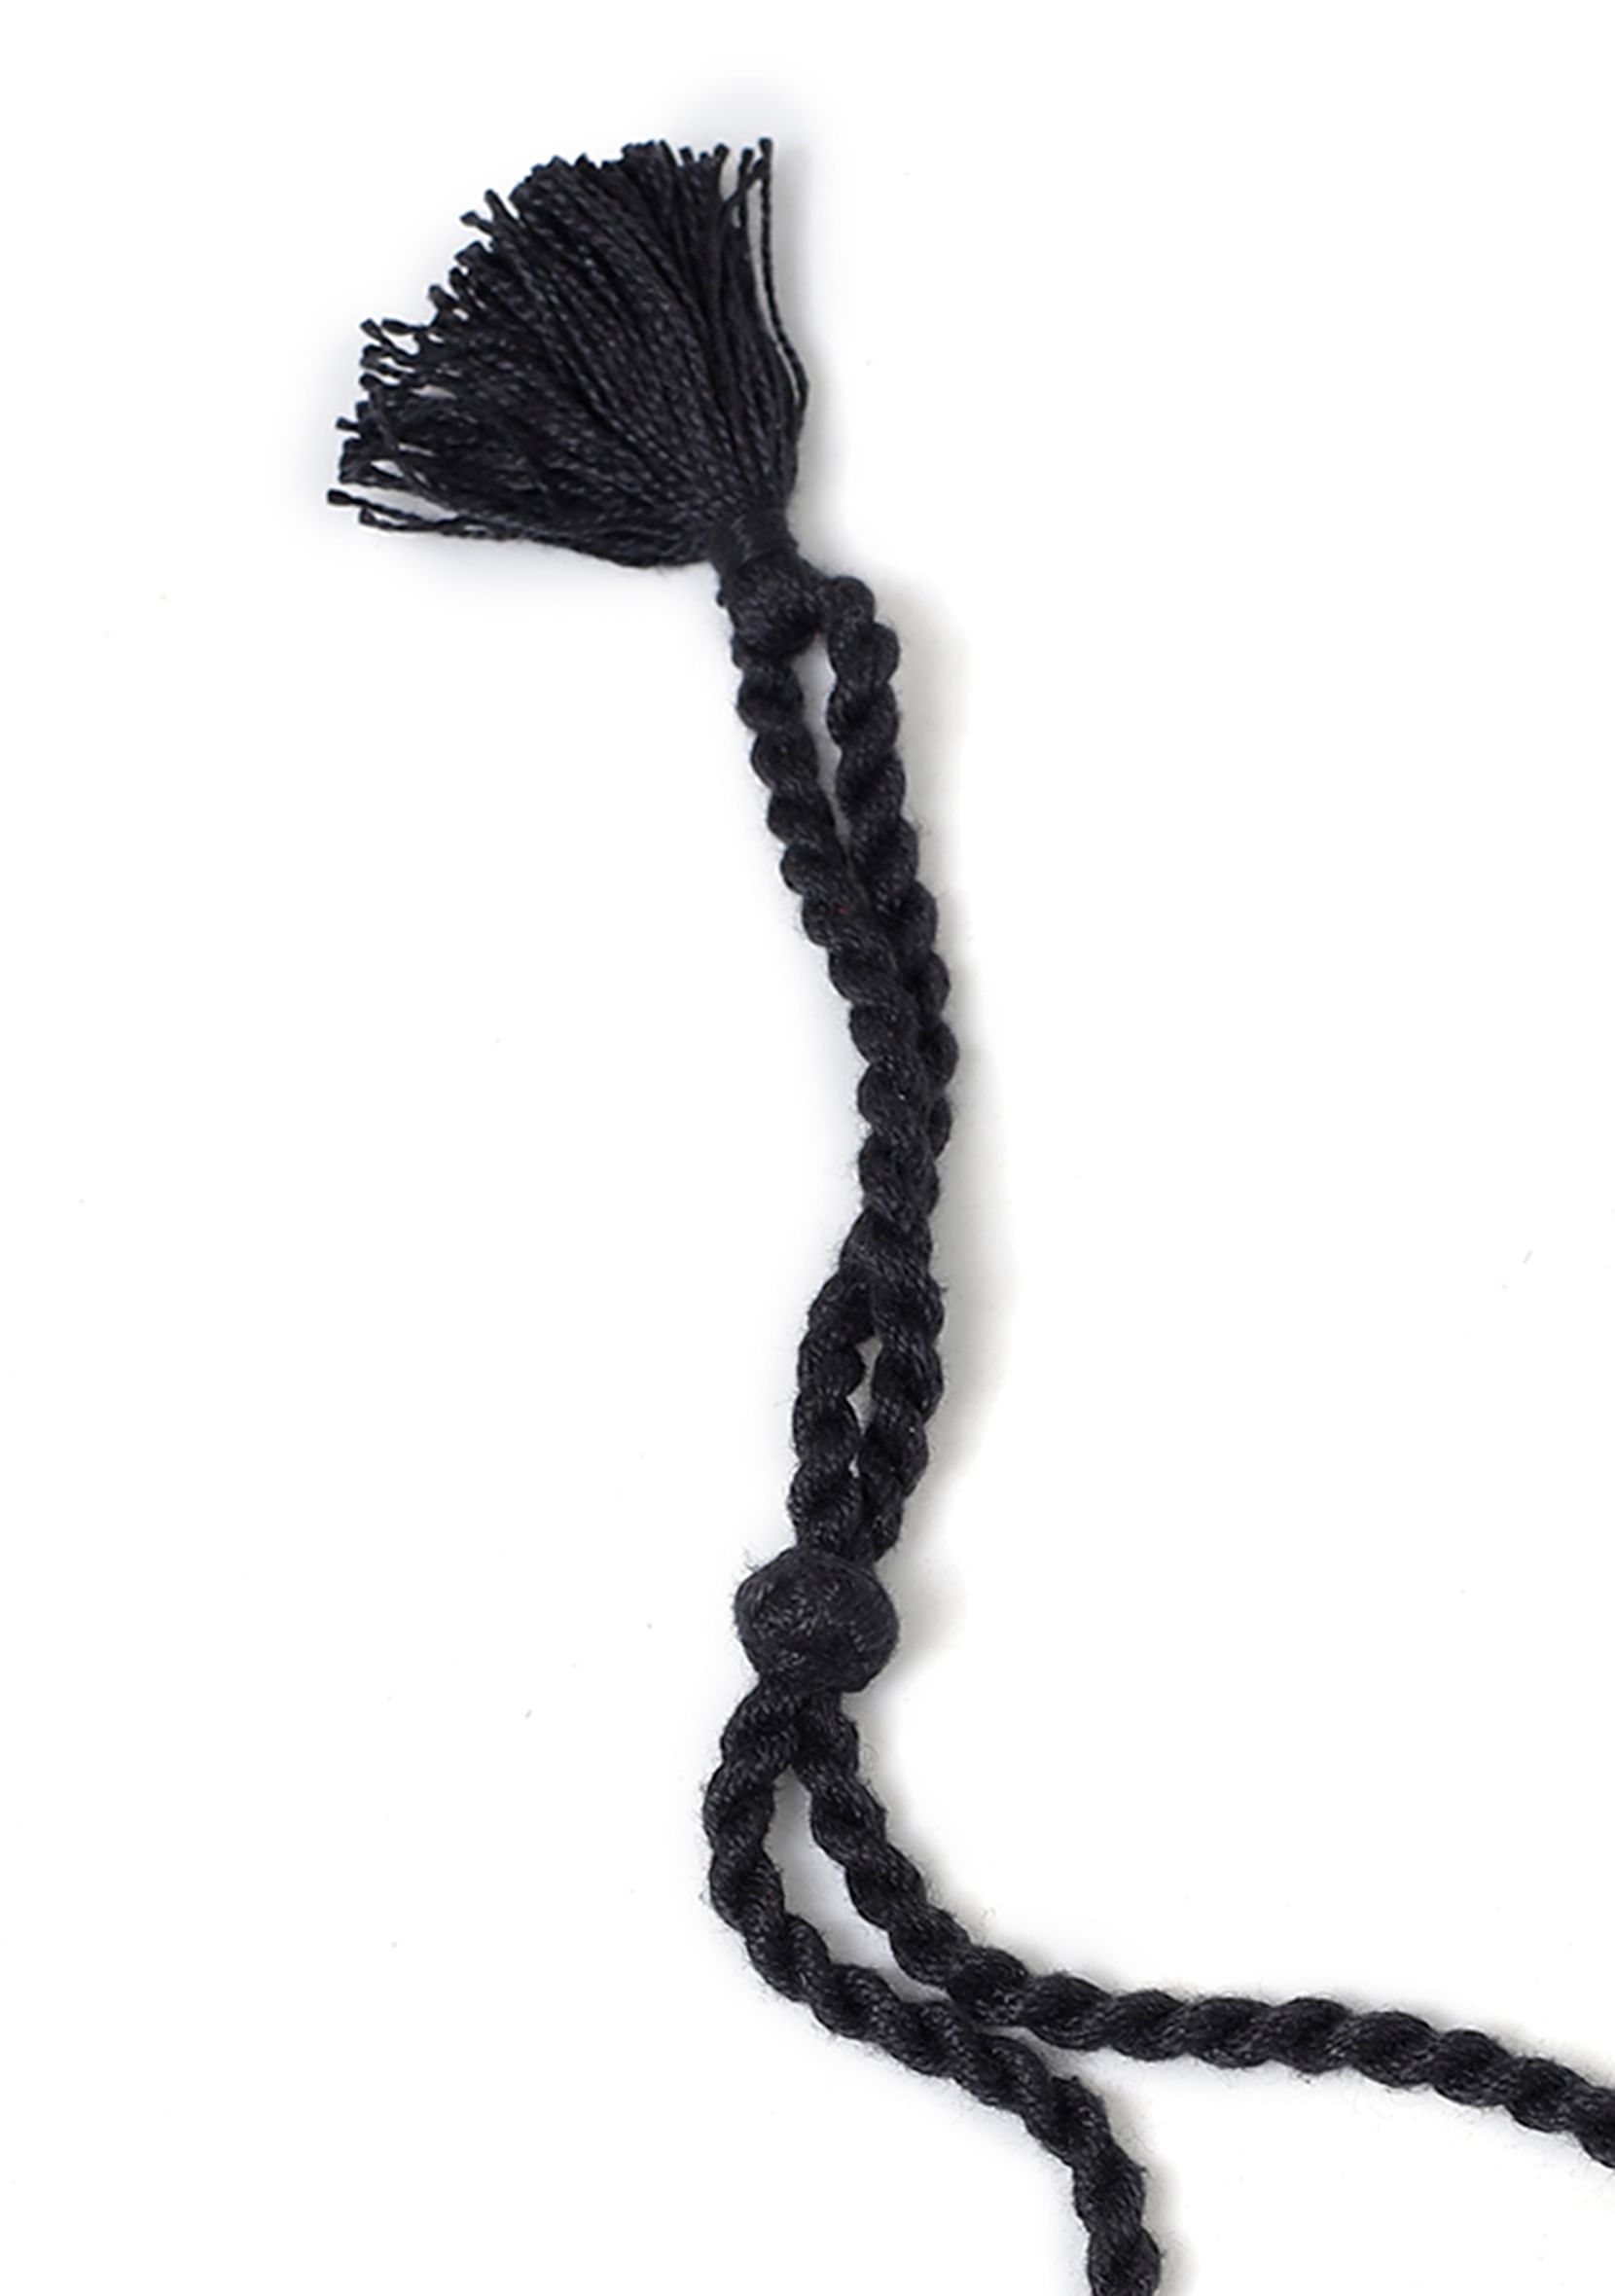 Onyx Black Thread Silver Tribal Necklace